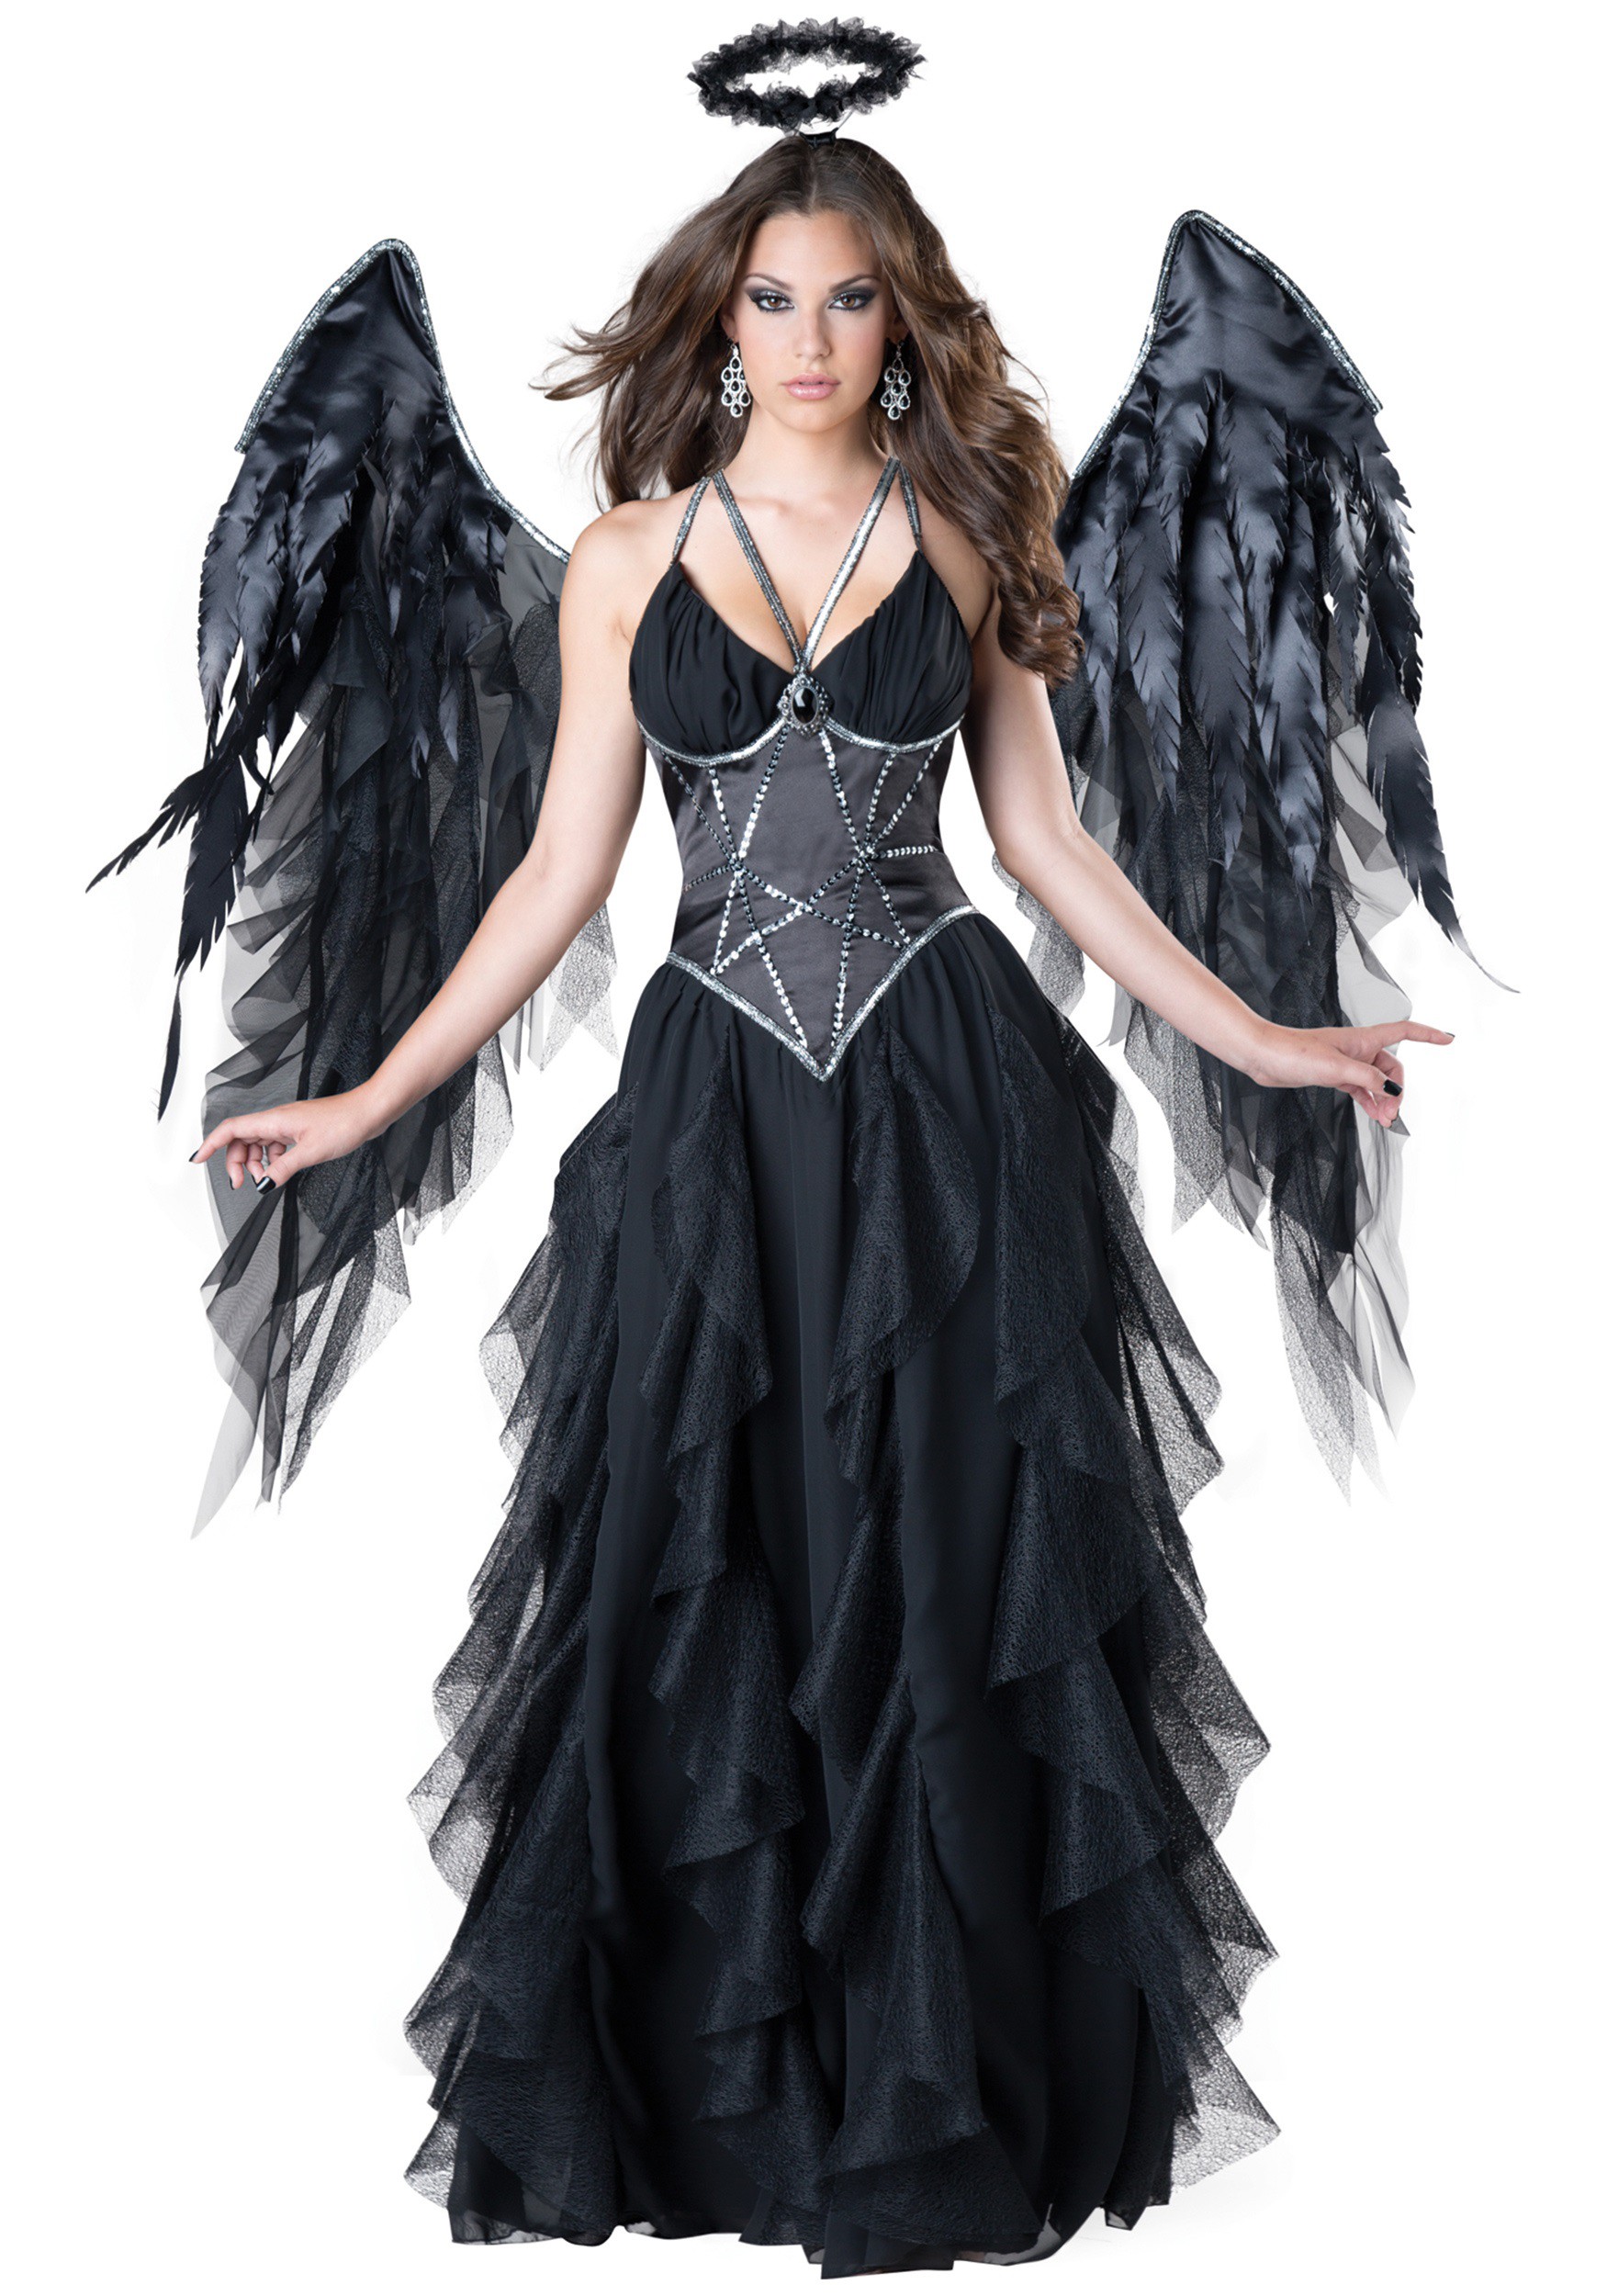 dark angel costume